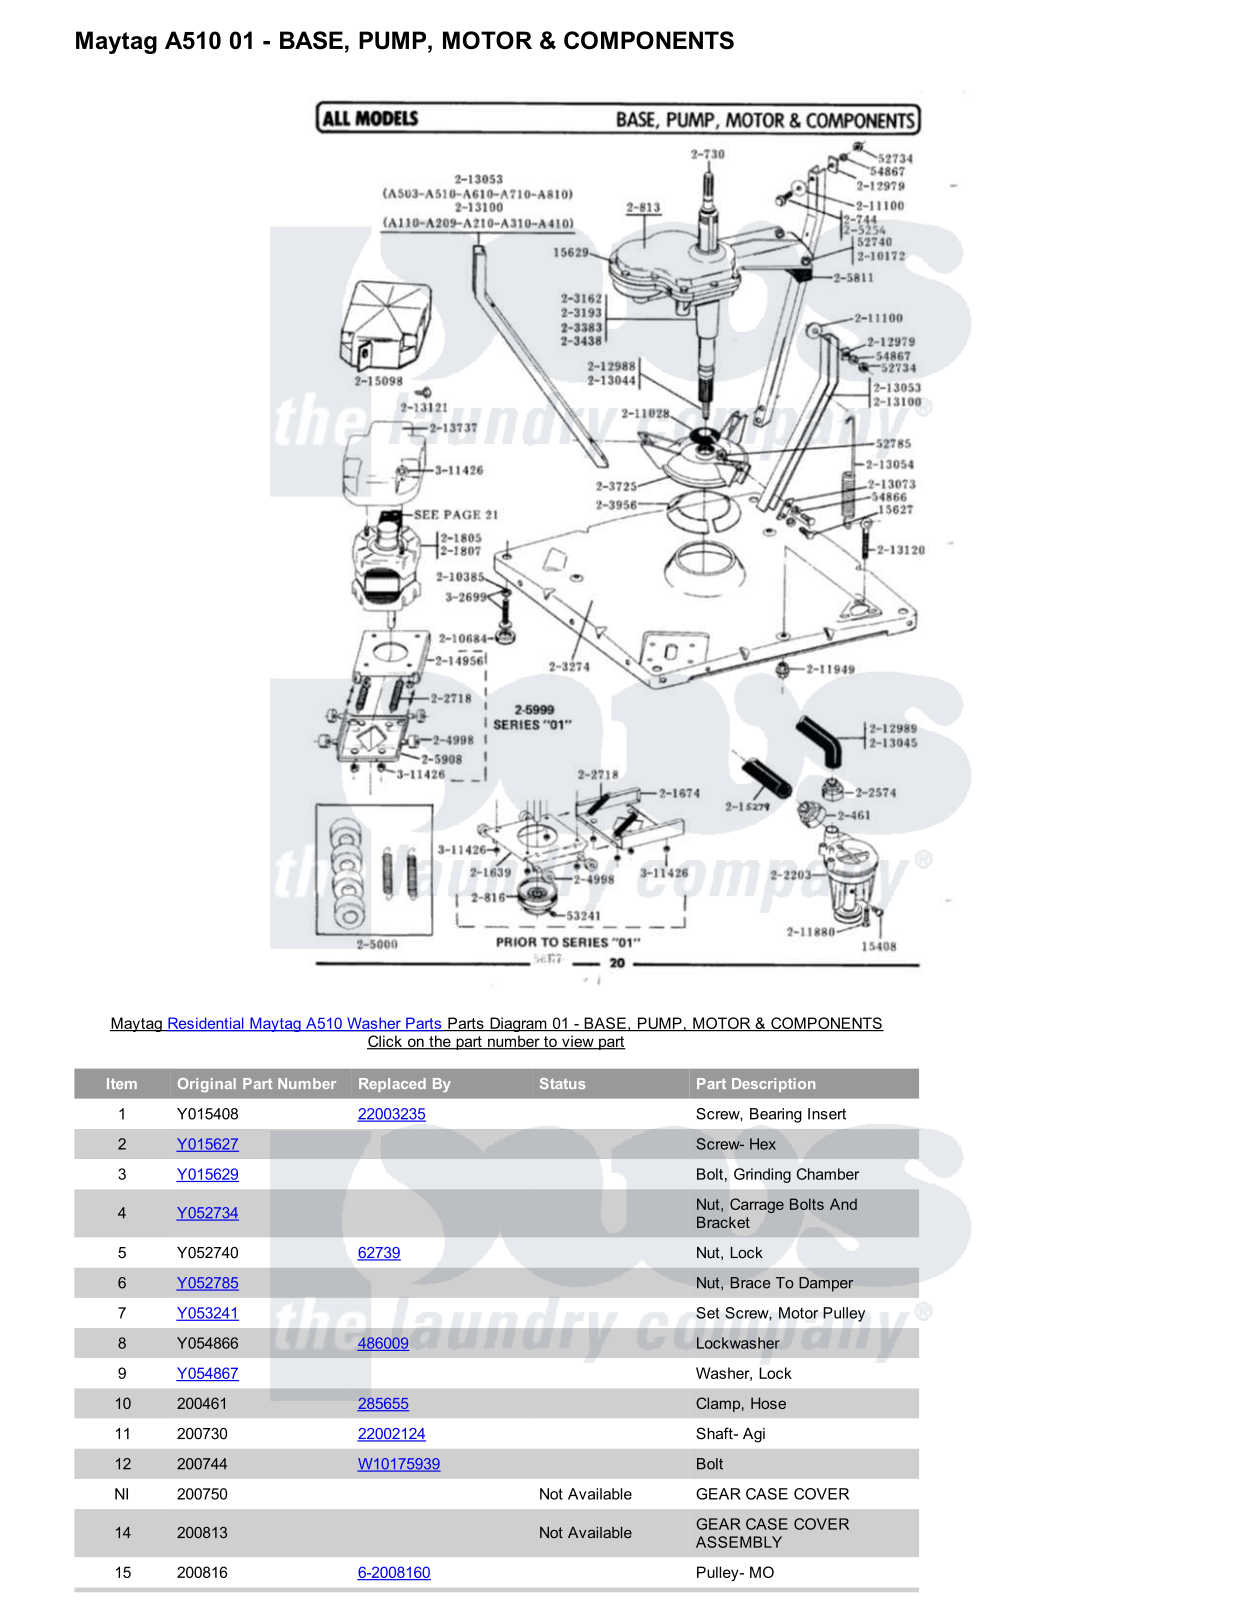 Maytag A510 Parts Diagram